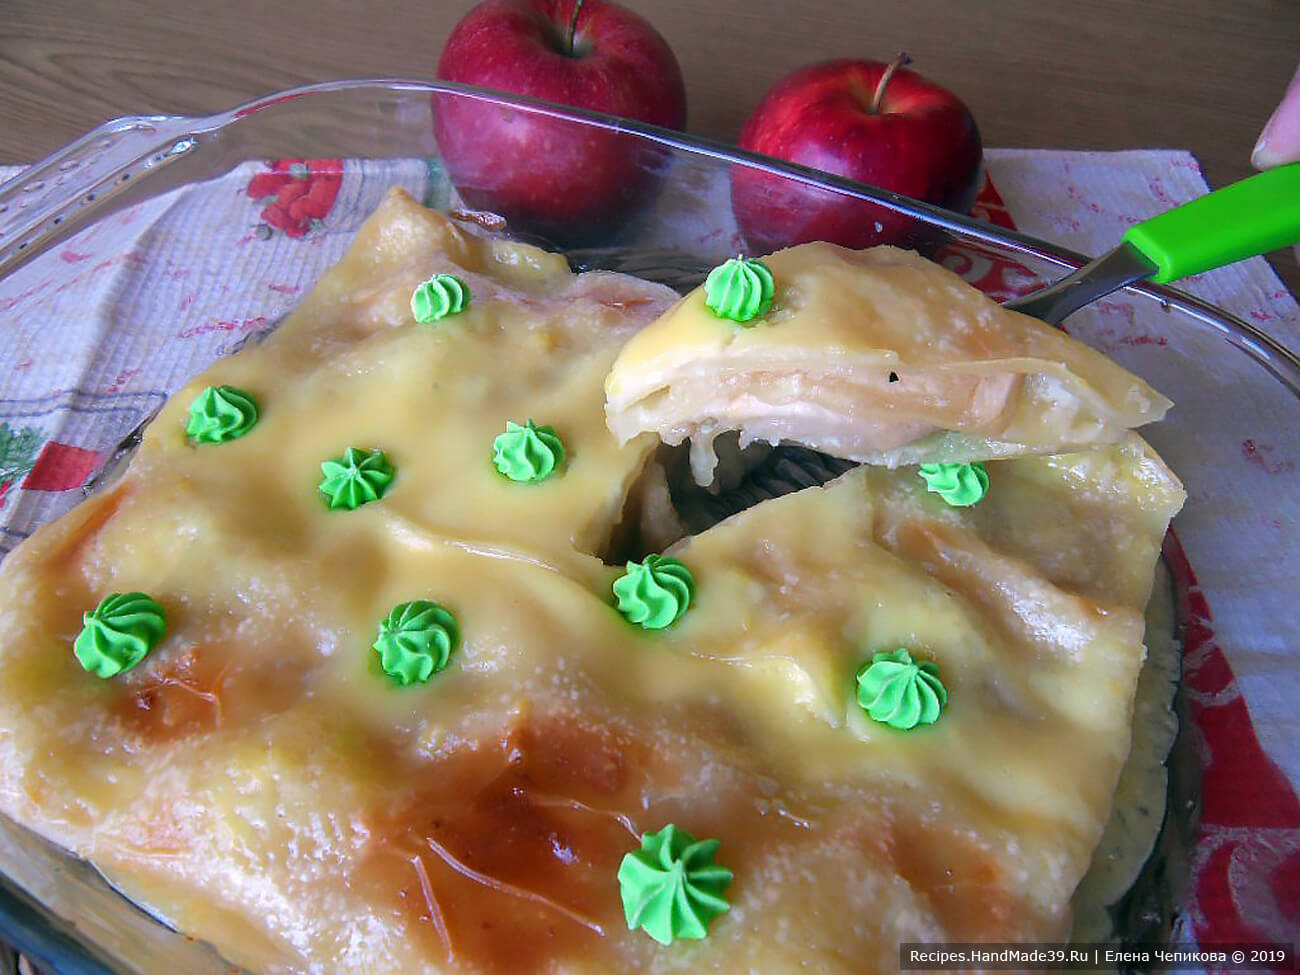 Яблочная лазанья – пошаговый кулинарный рецепт с фото